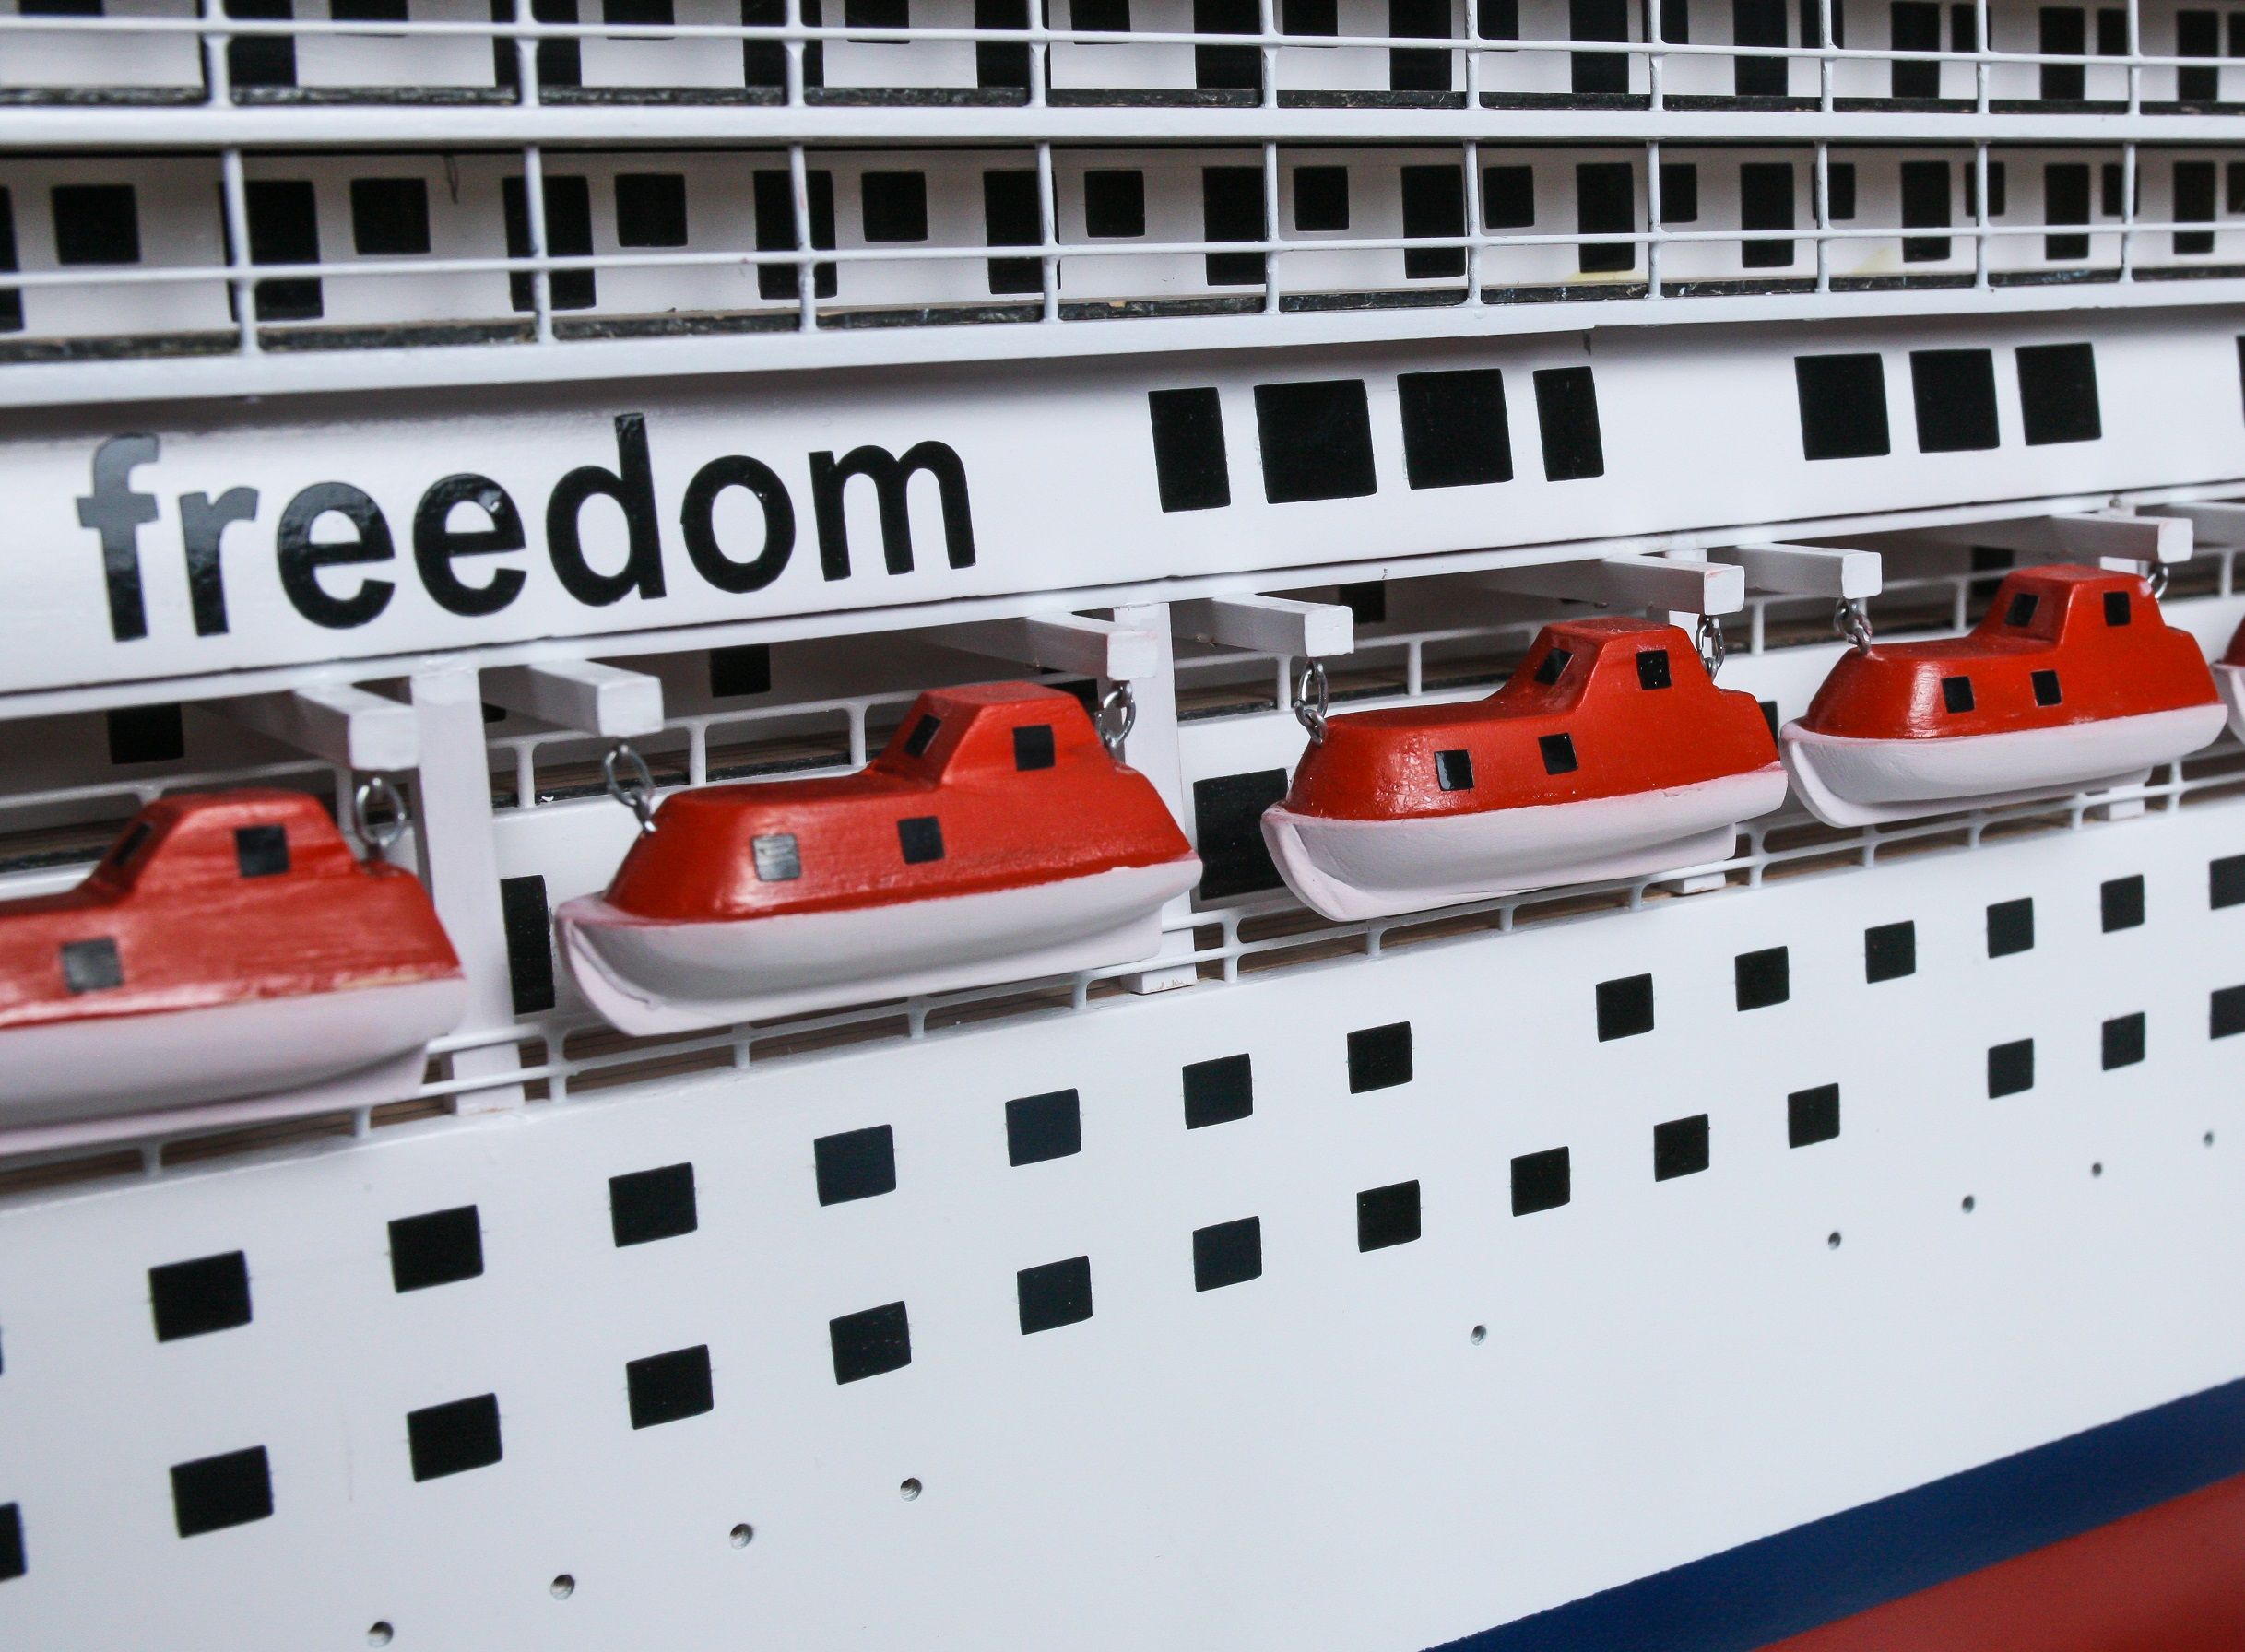 Carnival Freedom Cruise Vessel Model Boat